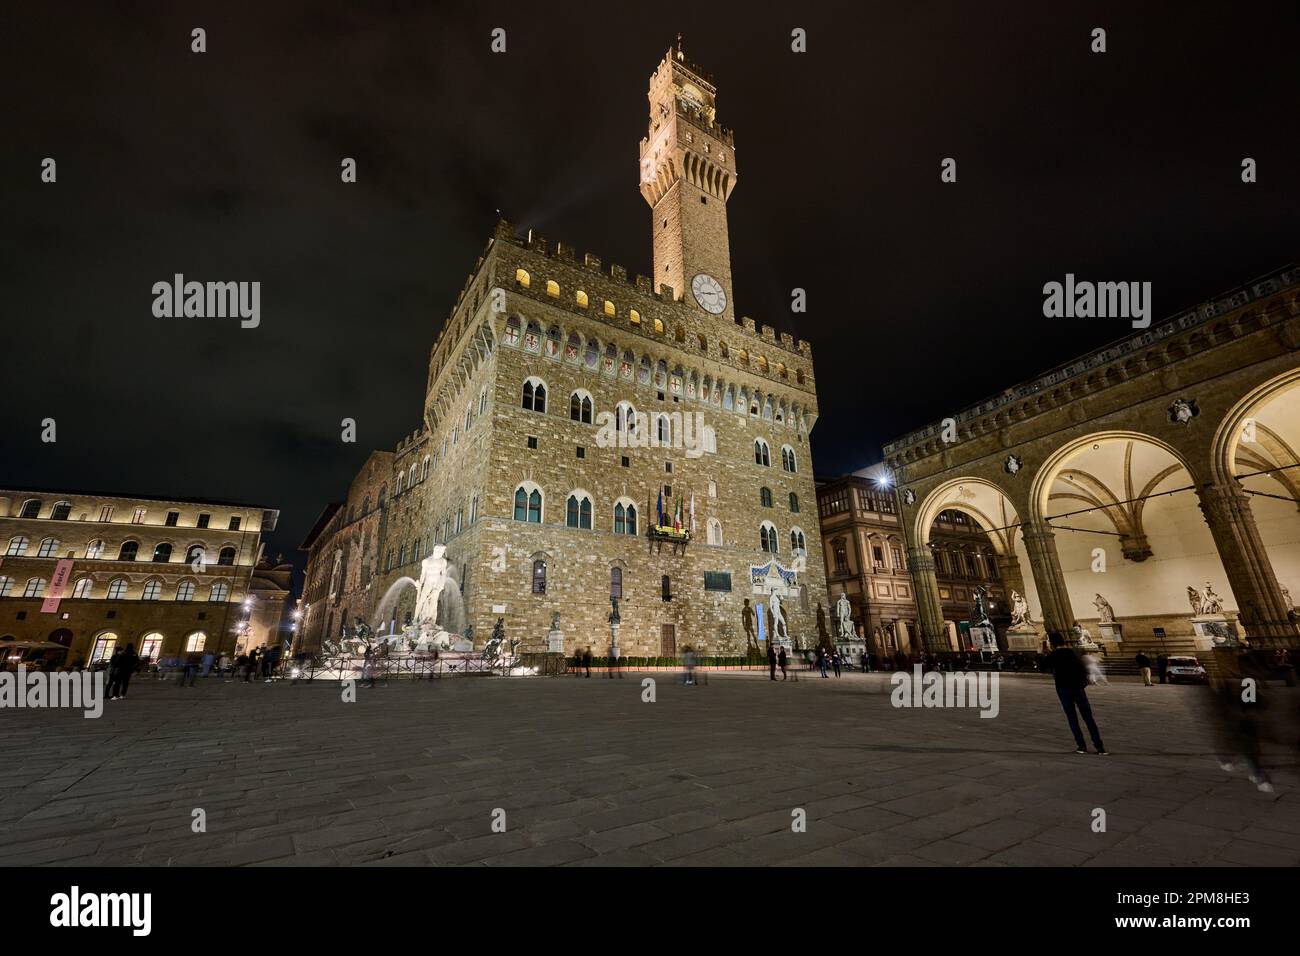 Nachtaufnahme des beleuchteten Palazzo Vecchio, Piazza della Signoria, Florenz, Toskana, Italien Stockfoto